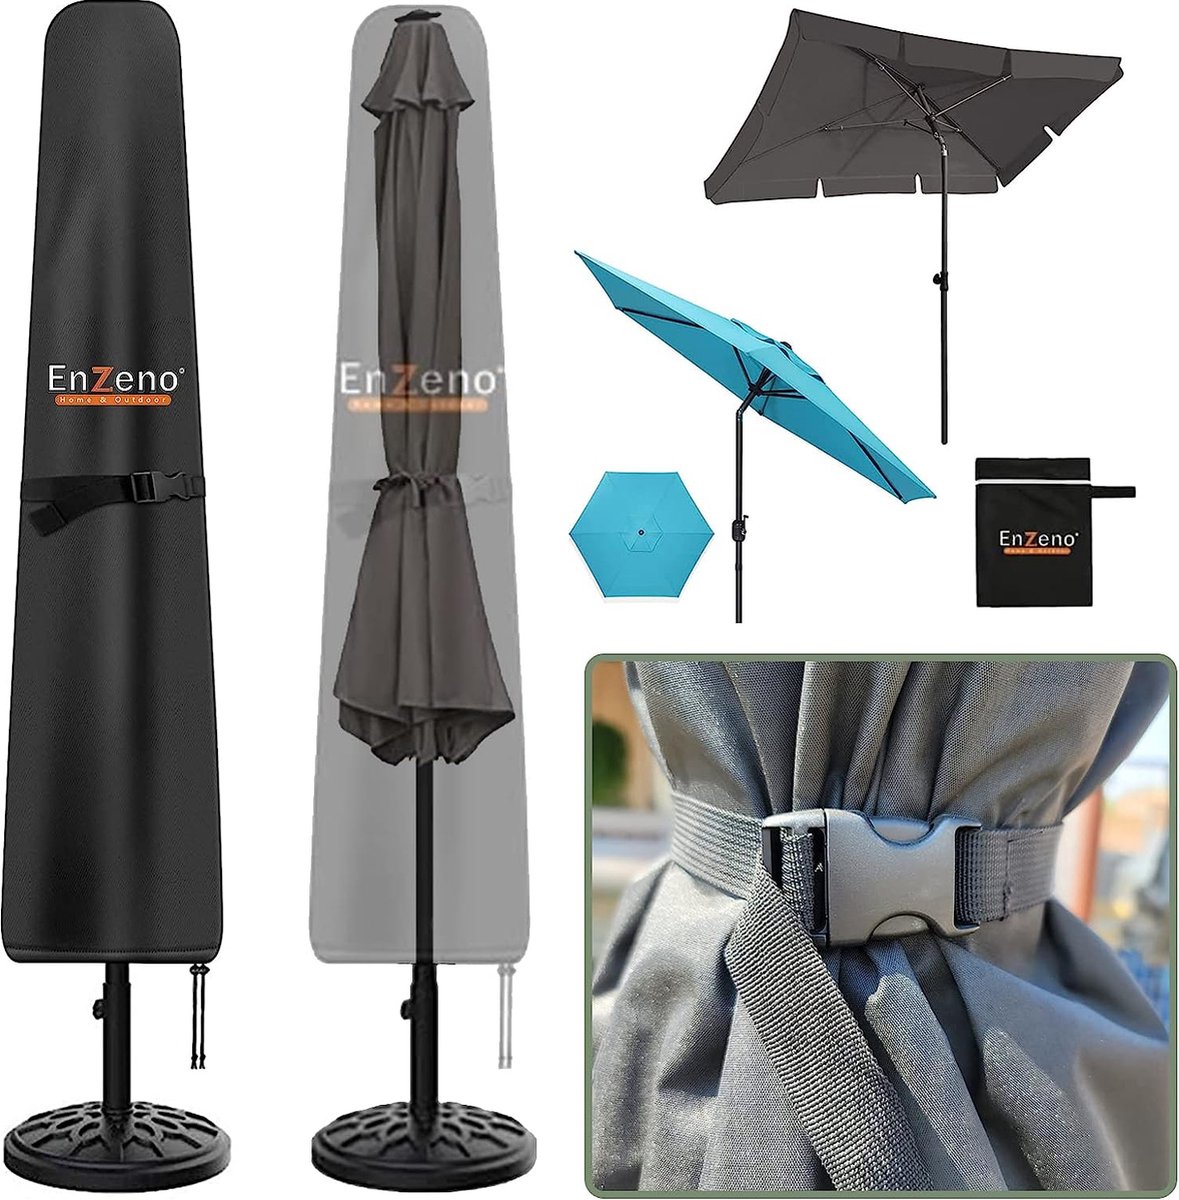 Parasol beschermhoes voor Ø 200 cm / 300 cm tuinparasol, beschermhoes voor parasol waterdicht, hoes voor marktparaplu / balkonparaplu (190 x 30 / 40 / 50 cm)